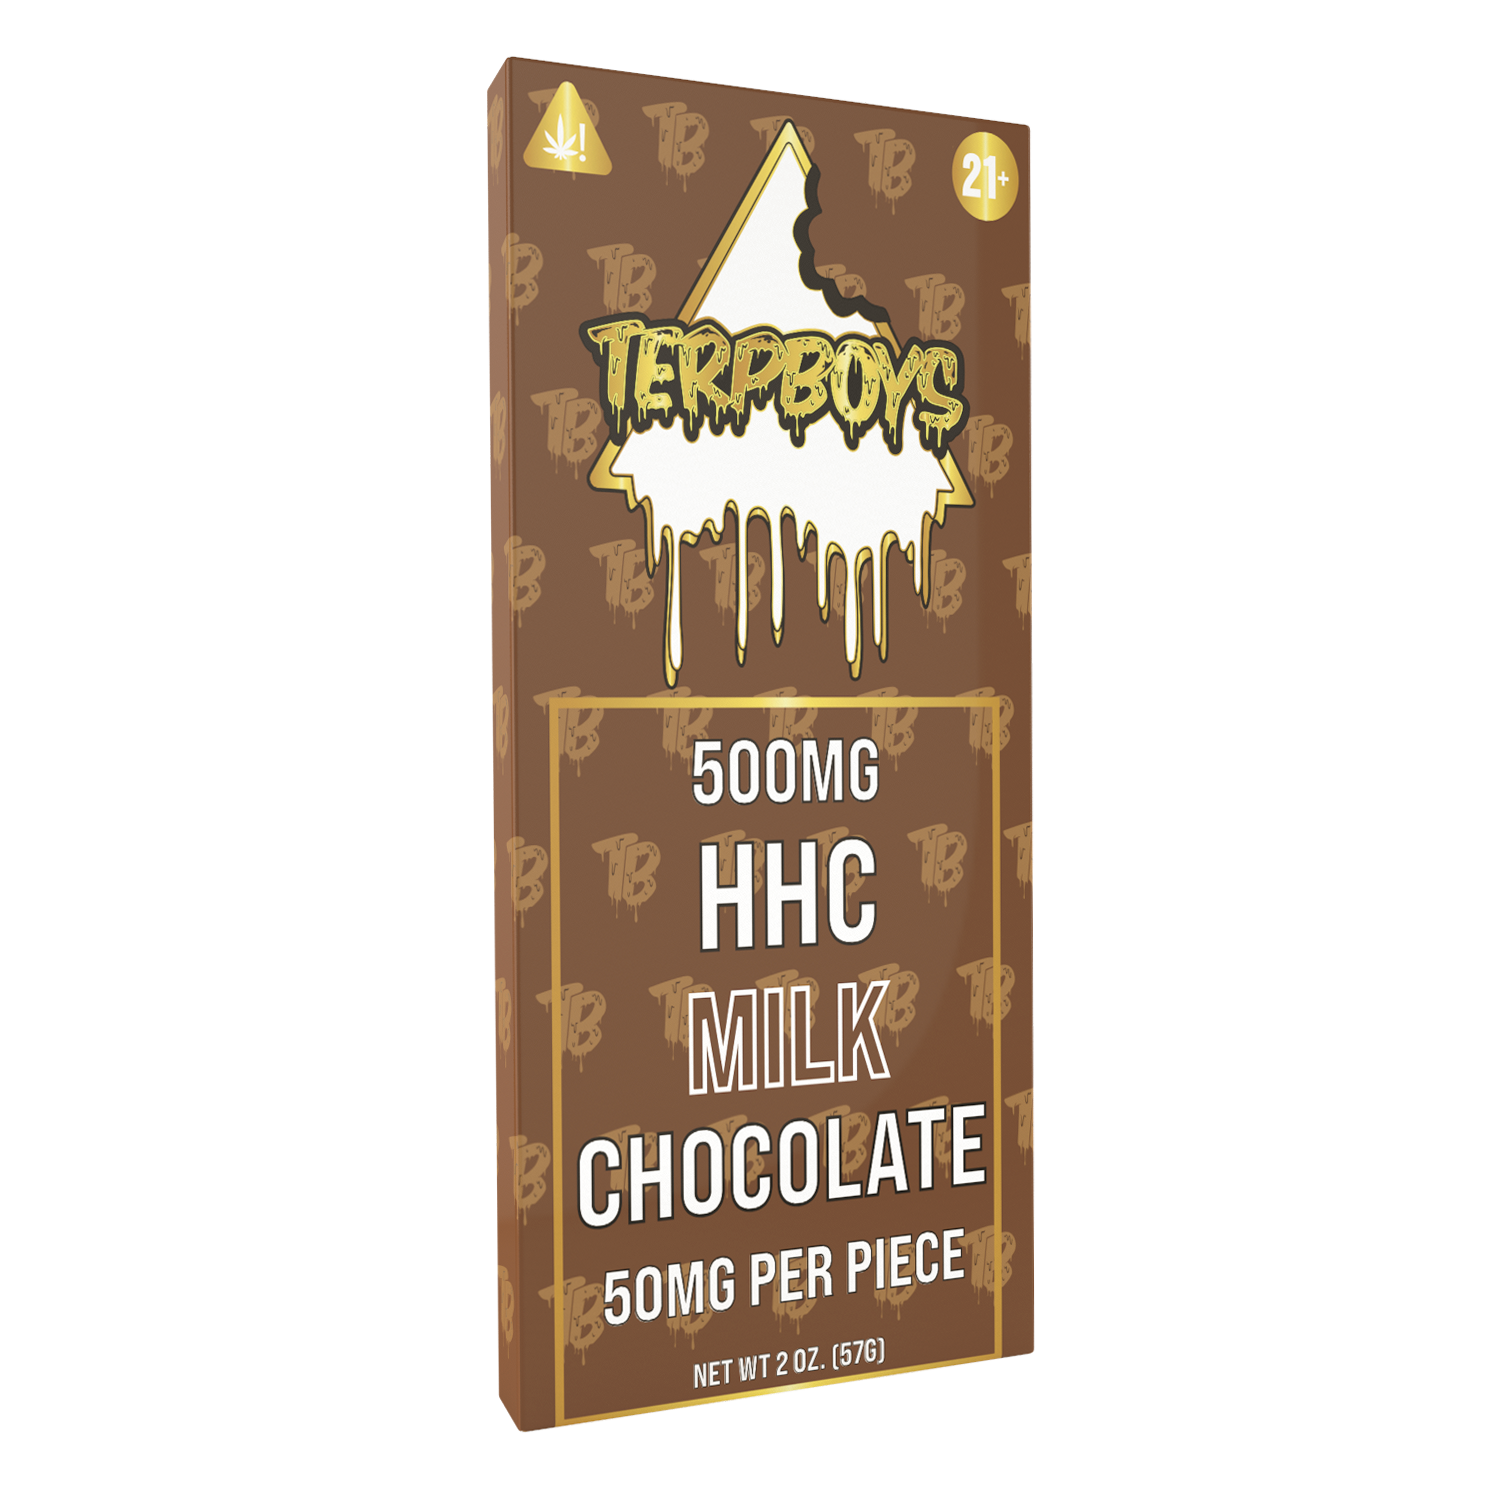 Terpboys HHC Milk Chocolate Bars - 500mg